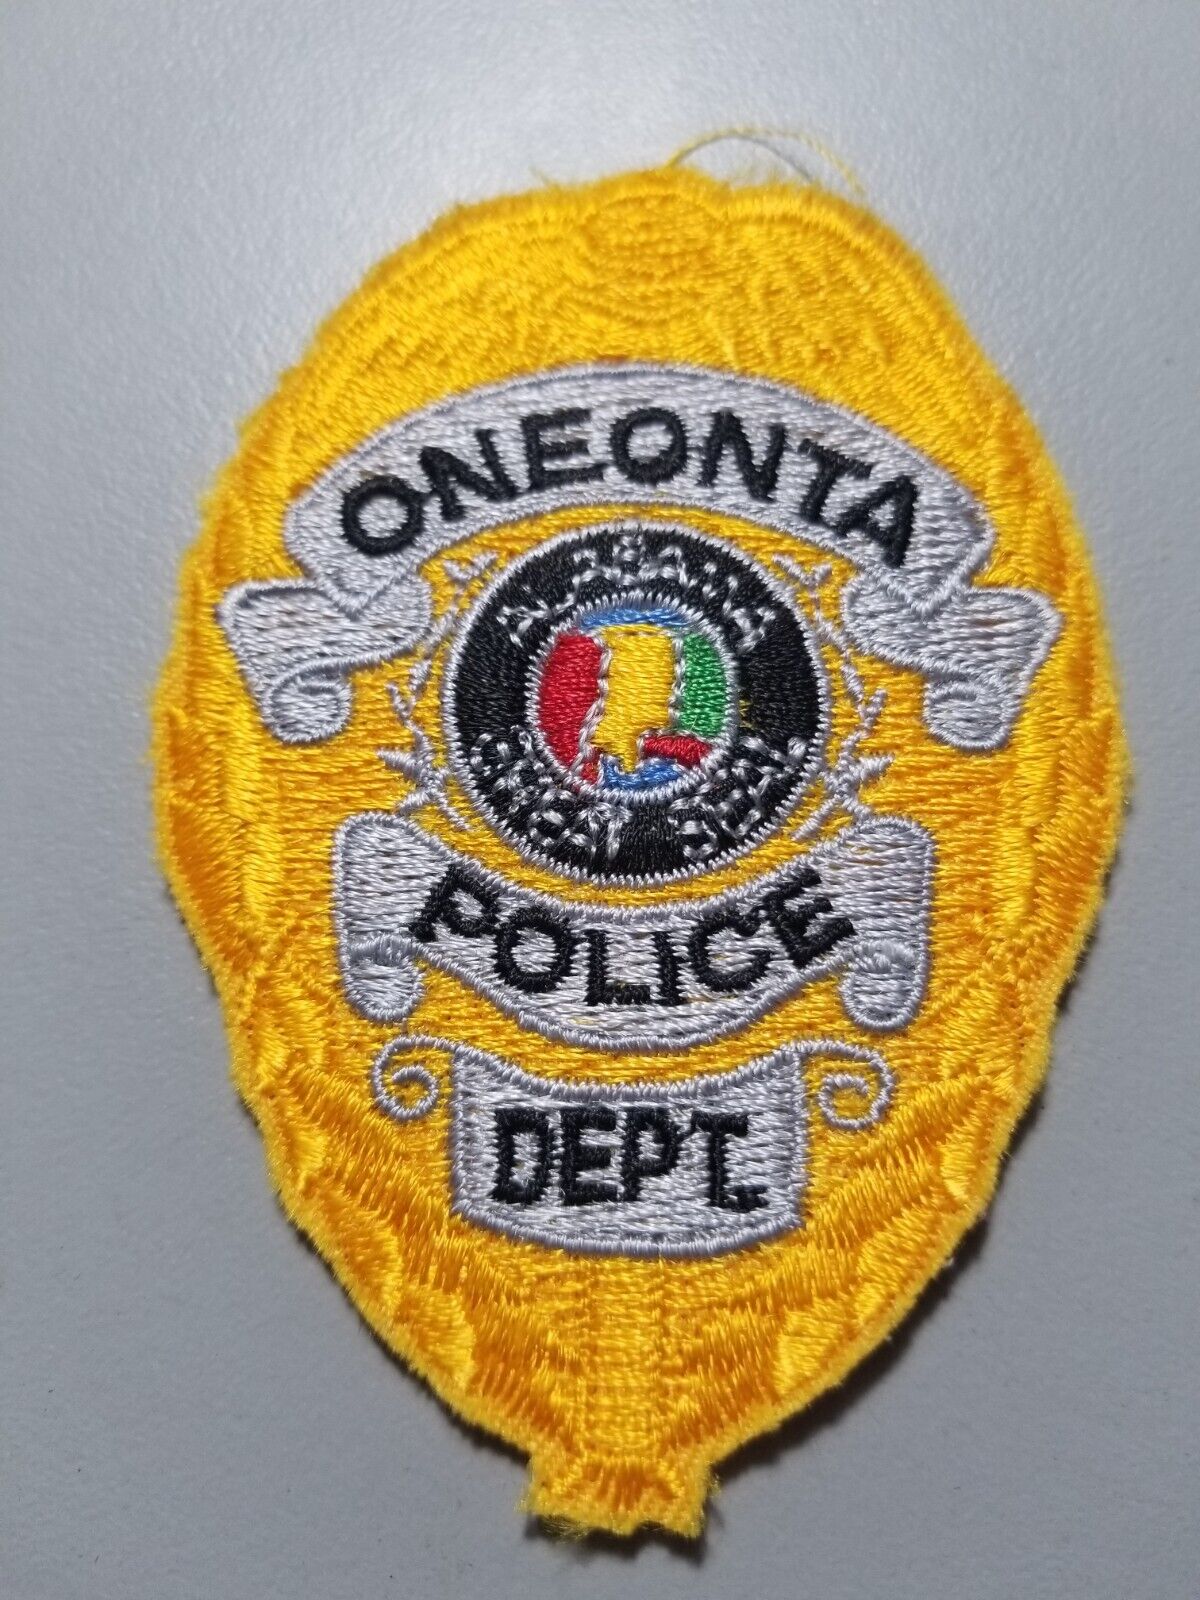 ONEONTA POLICE DEPARTMENT ALABAMA AL BADGE PATCH